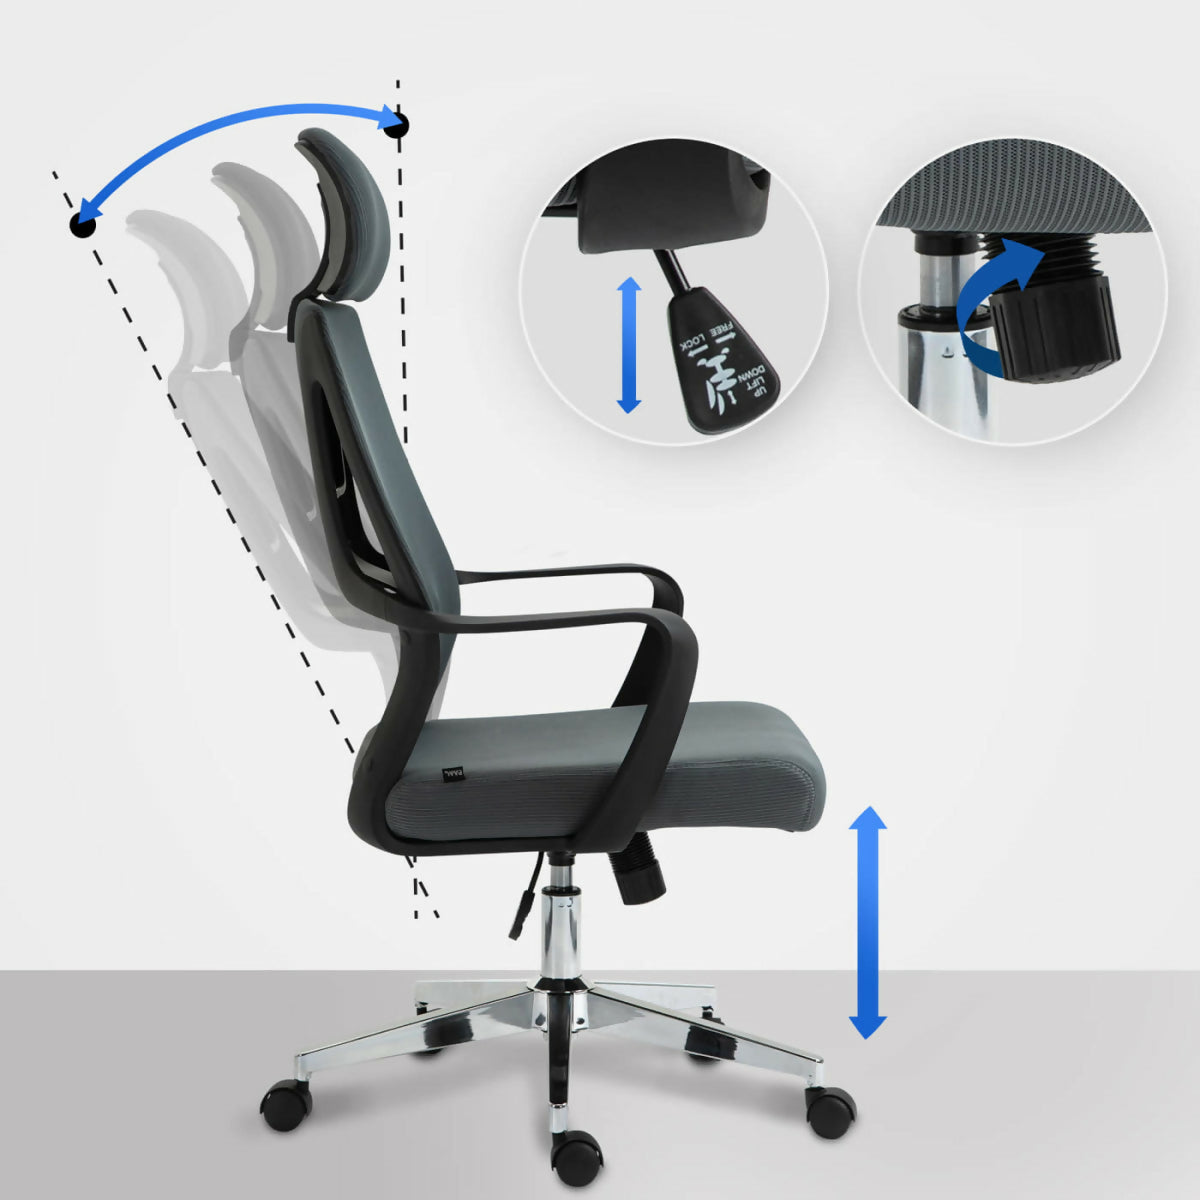 Kanab office chair - Gray fabric - 0